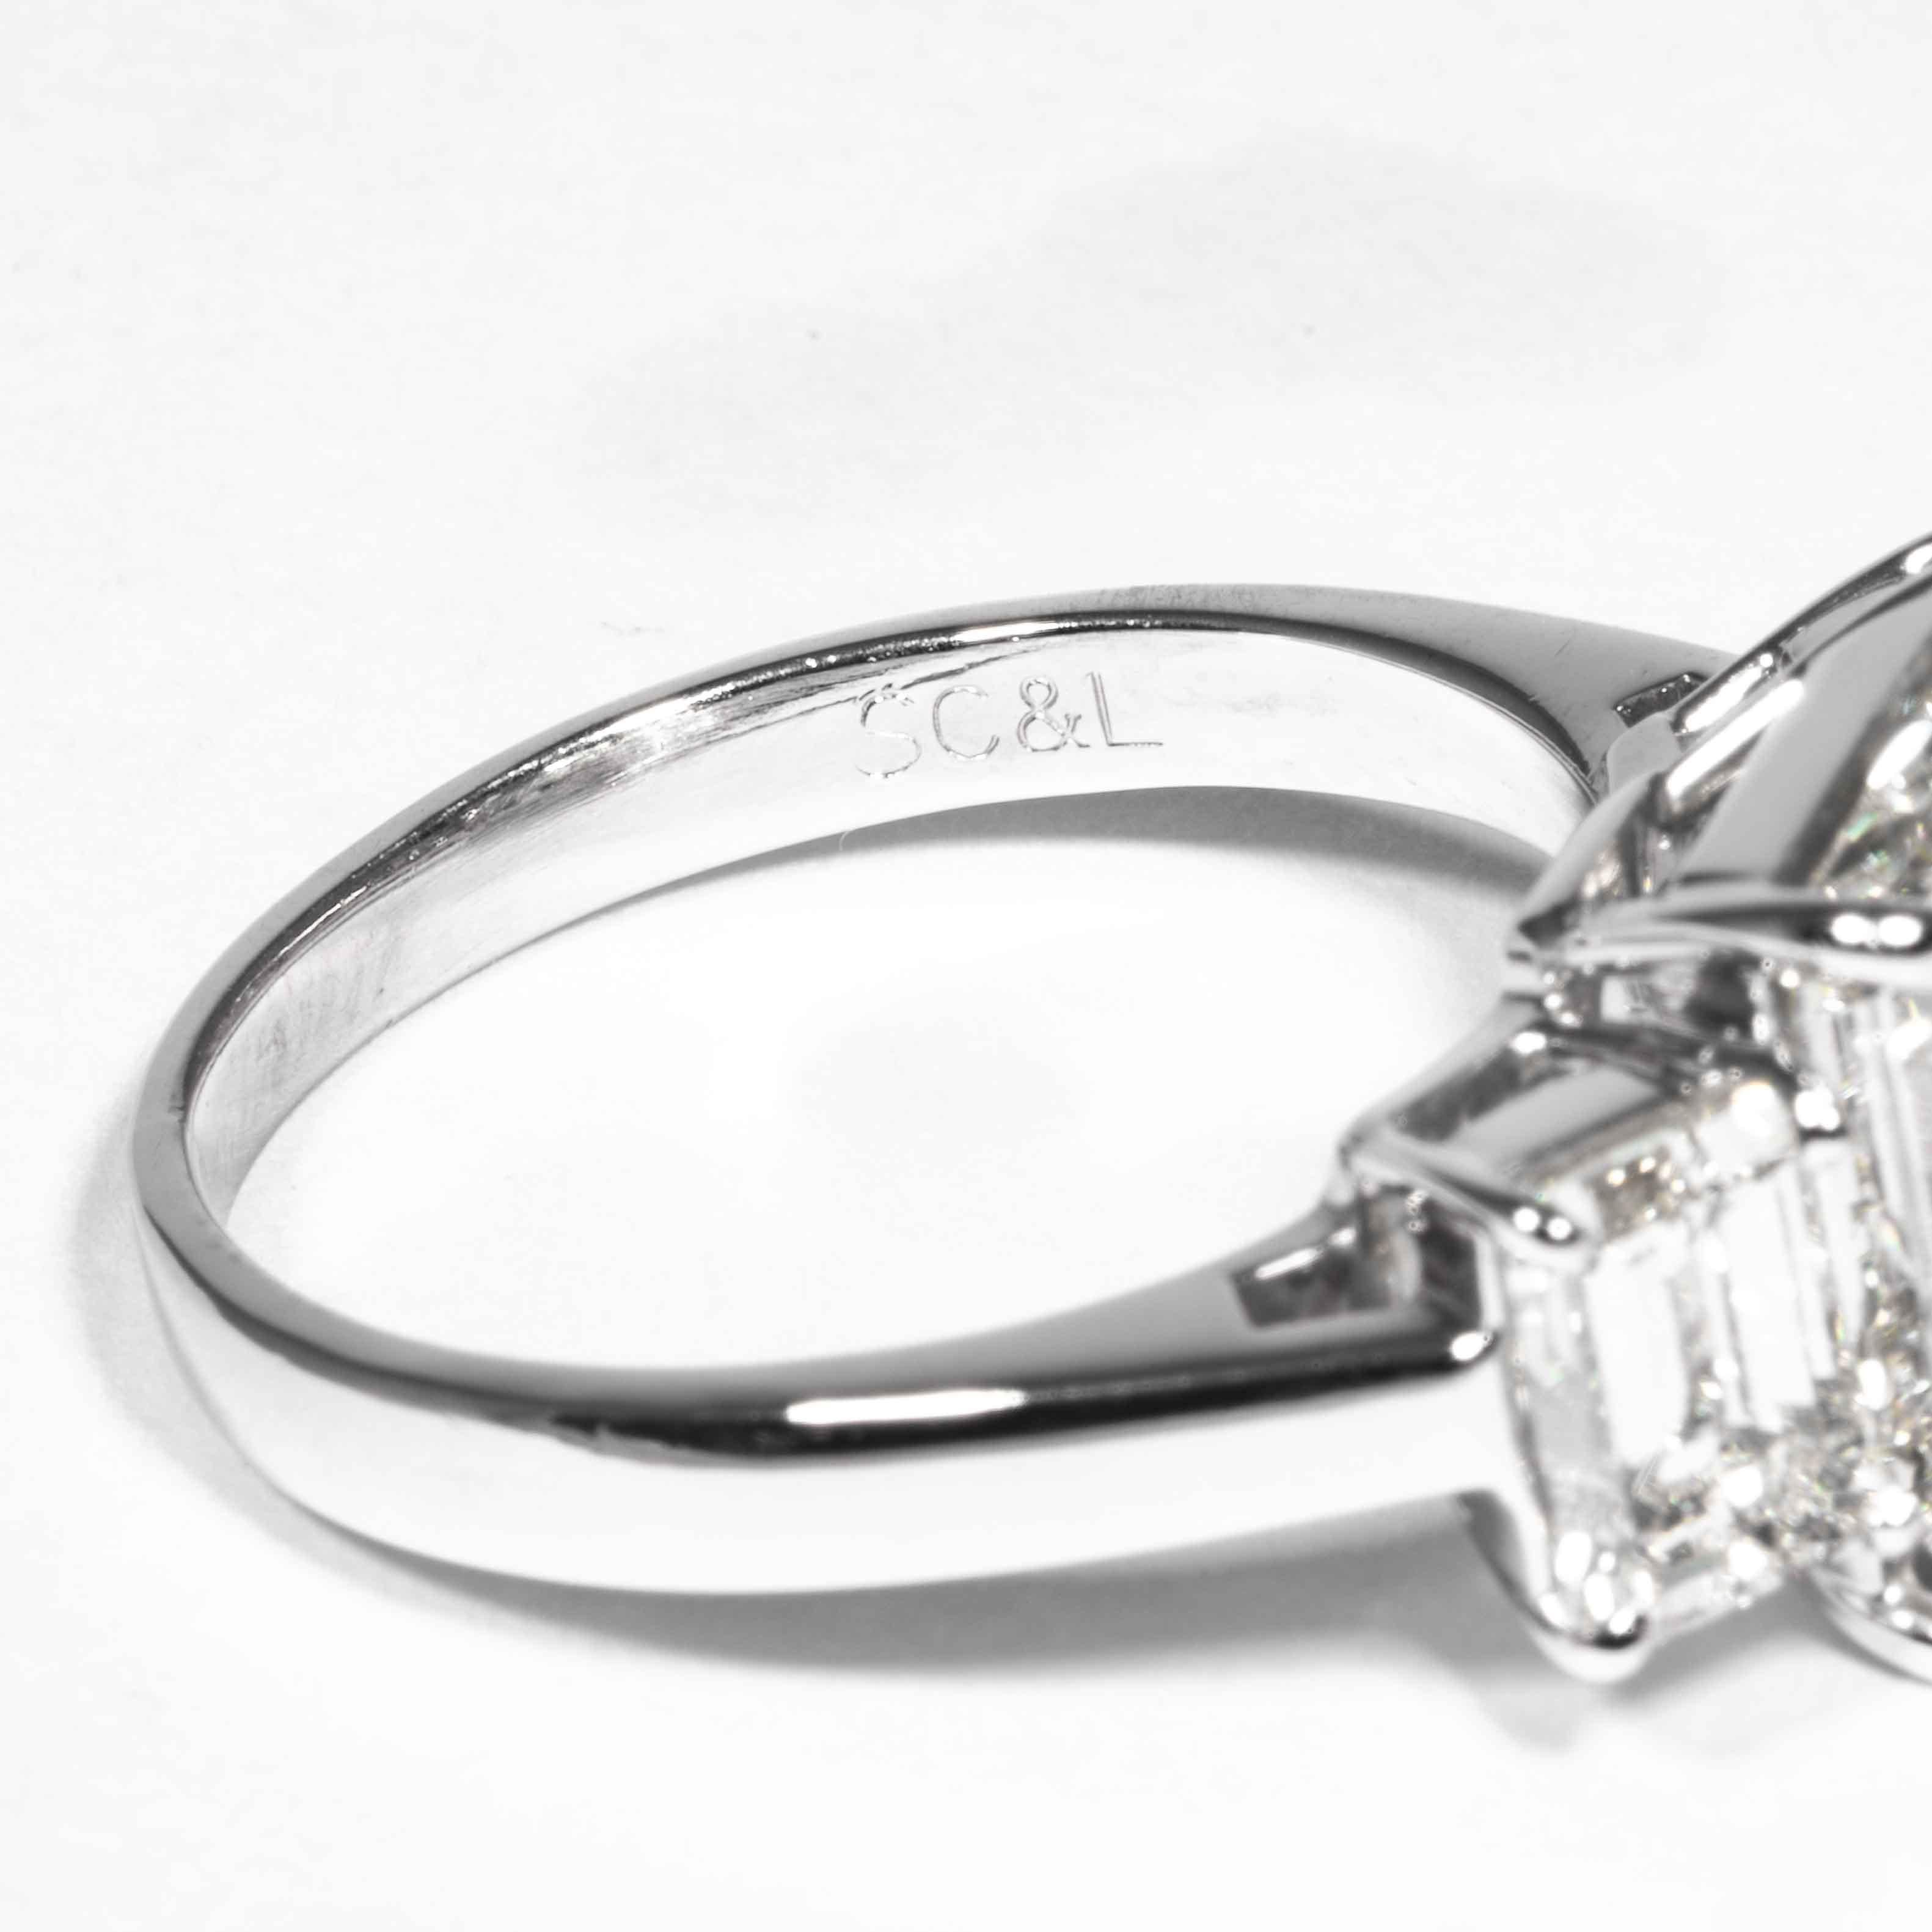 Shreve, Crump & Low GIA Certified 5.05 Carat J VVS2 Emerald Cut Diamond Ring For Sale 1